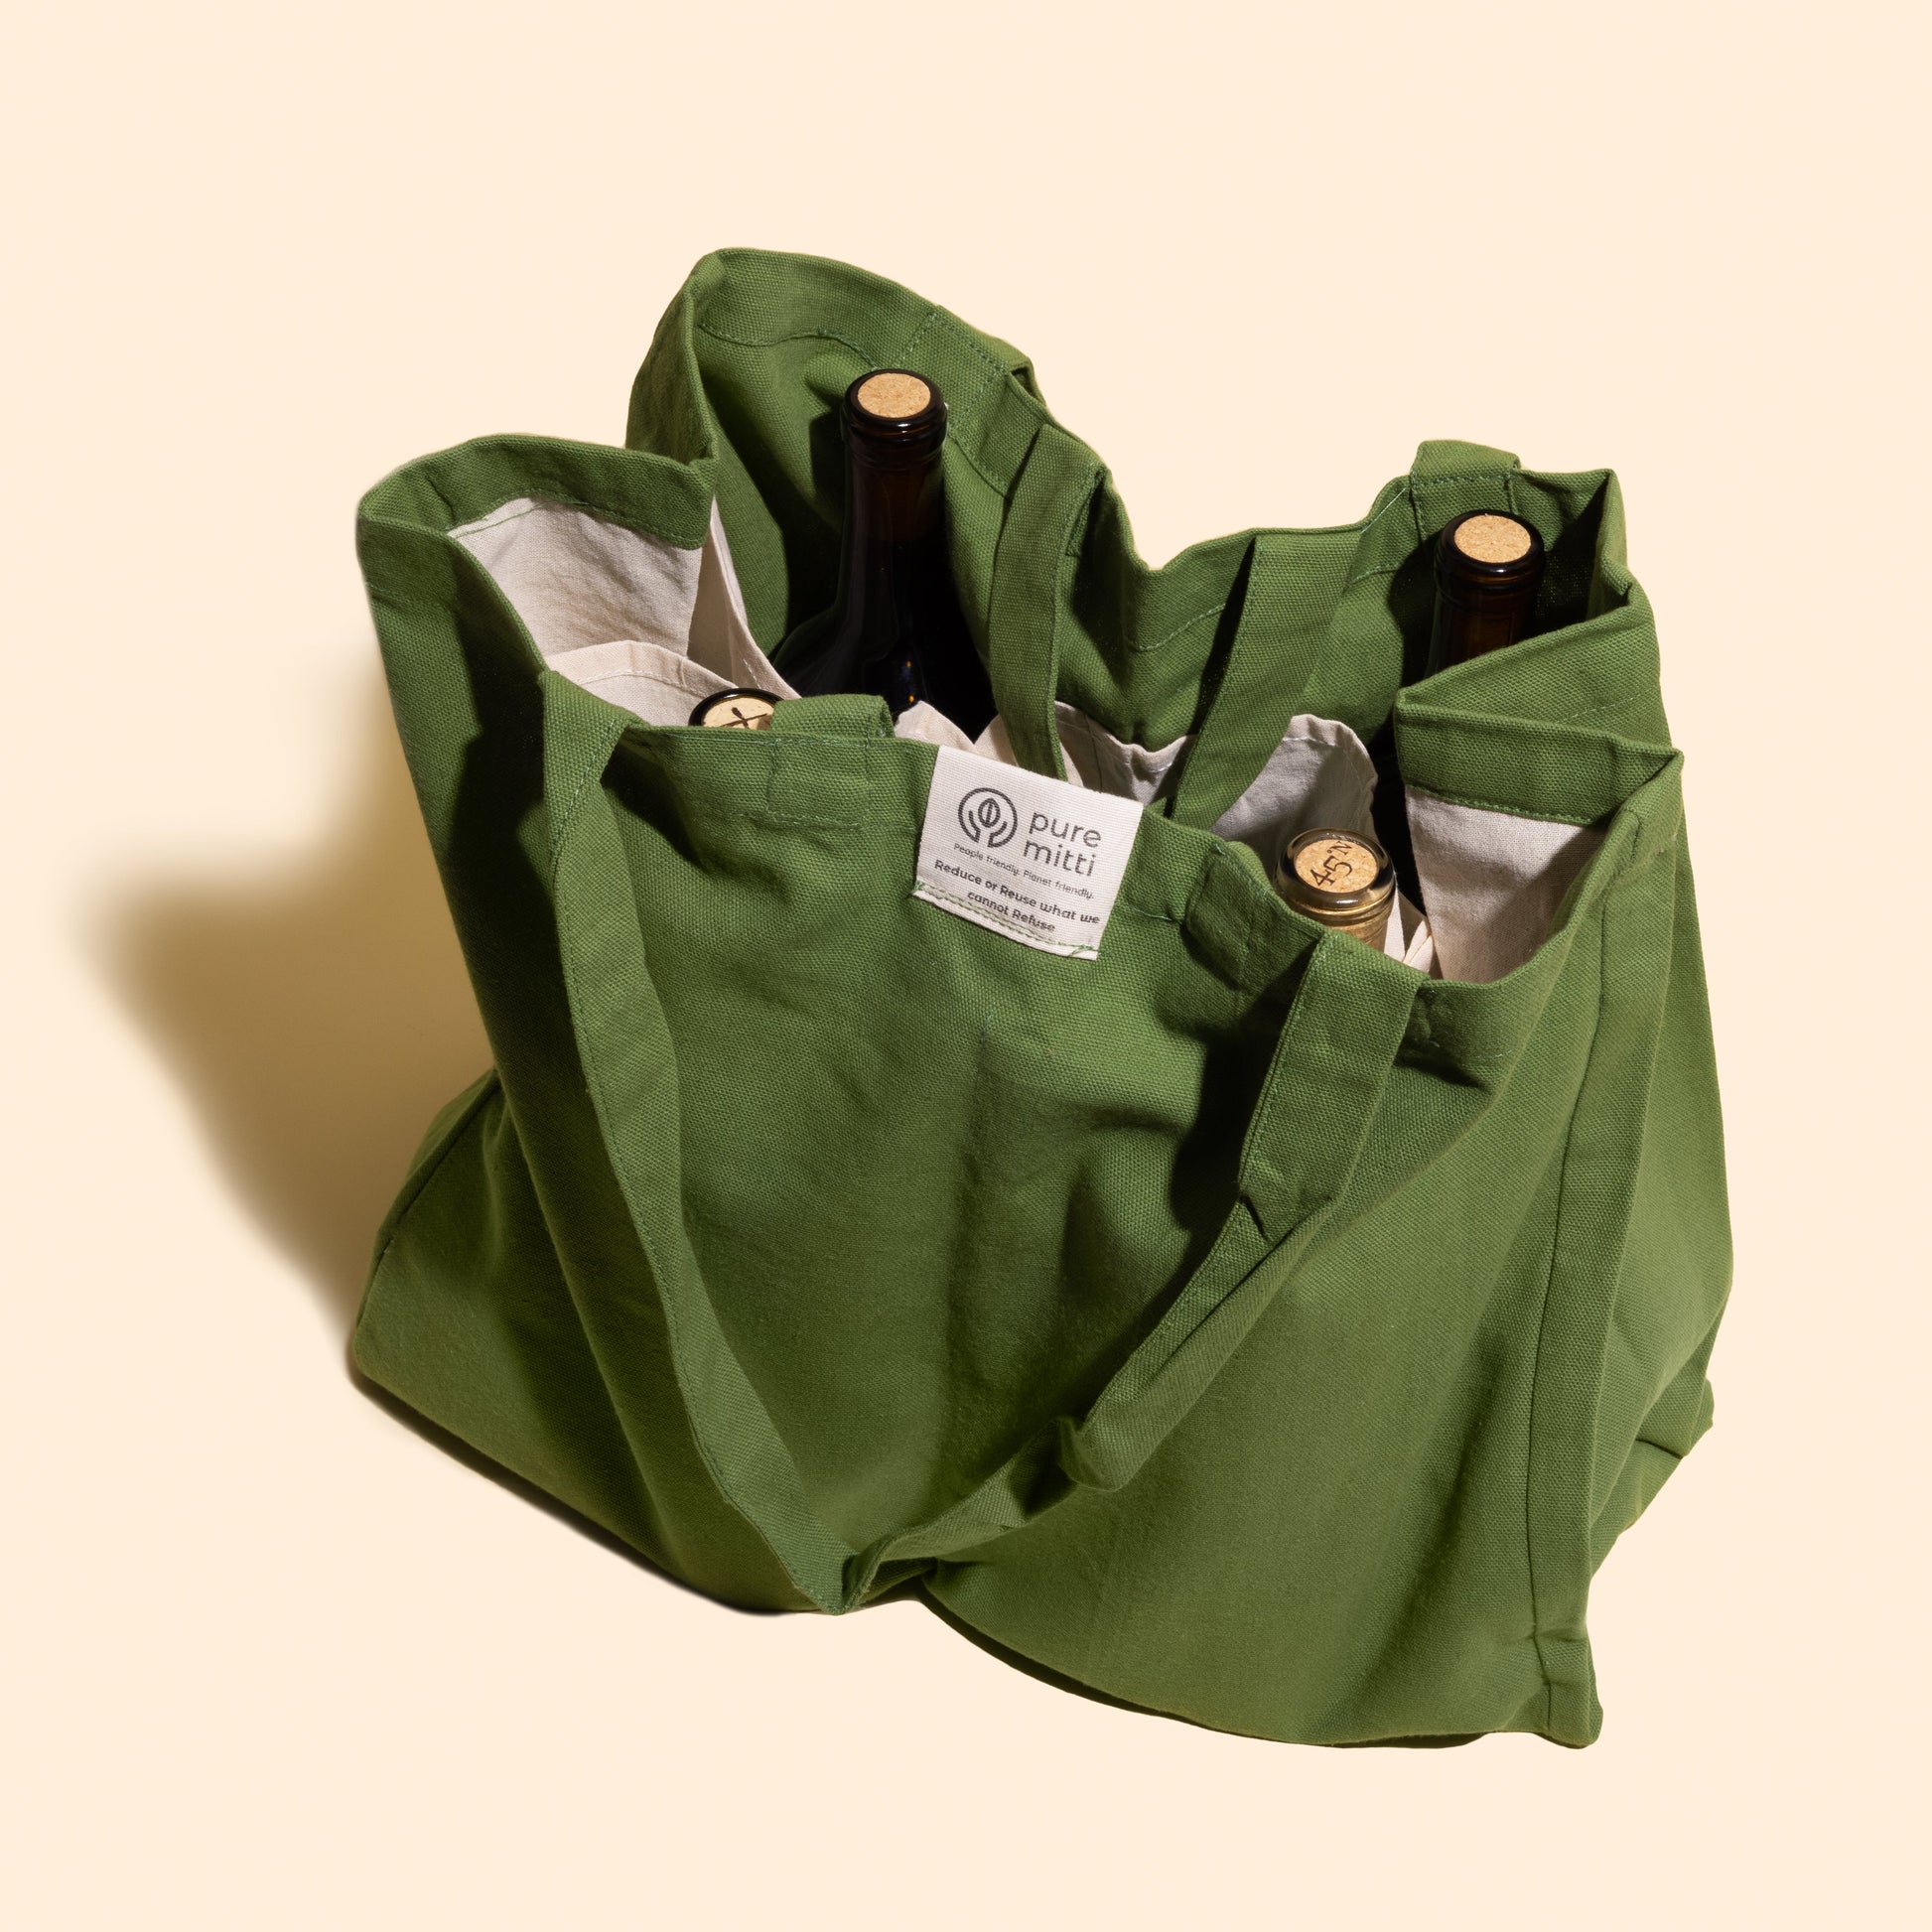 Custom Print Logo - Reusable Multi-pocket Organic Cotton Tote Bag (MOQ 100) - Pure Mitti